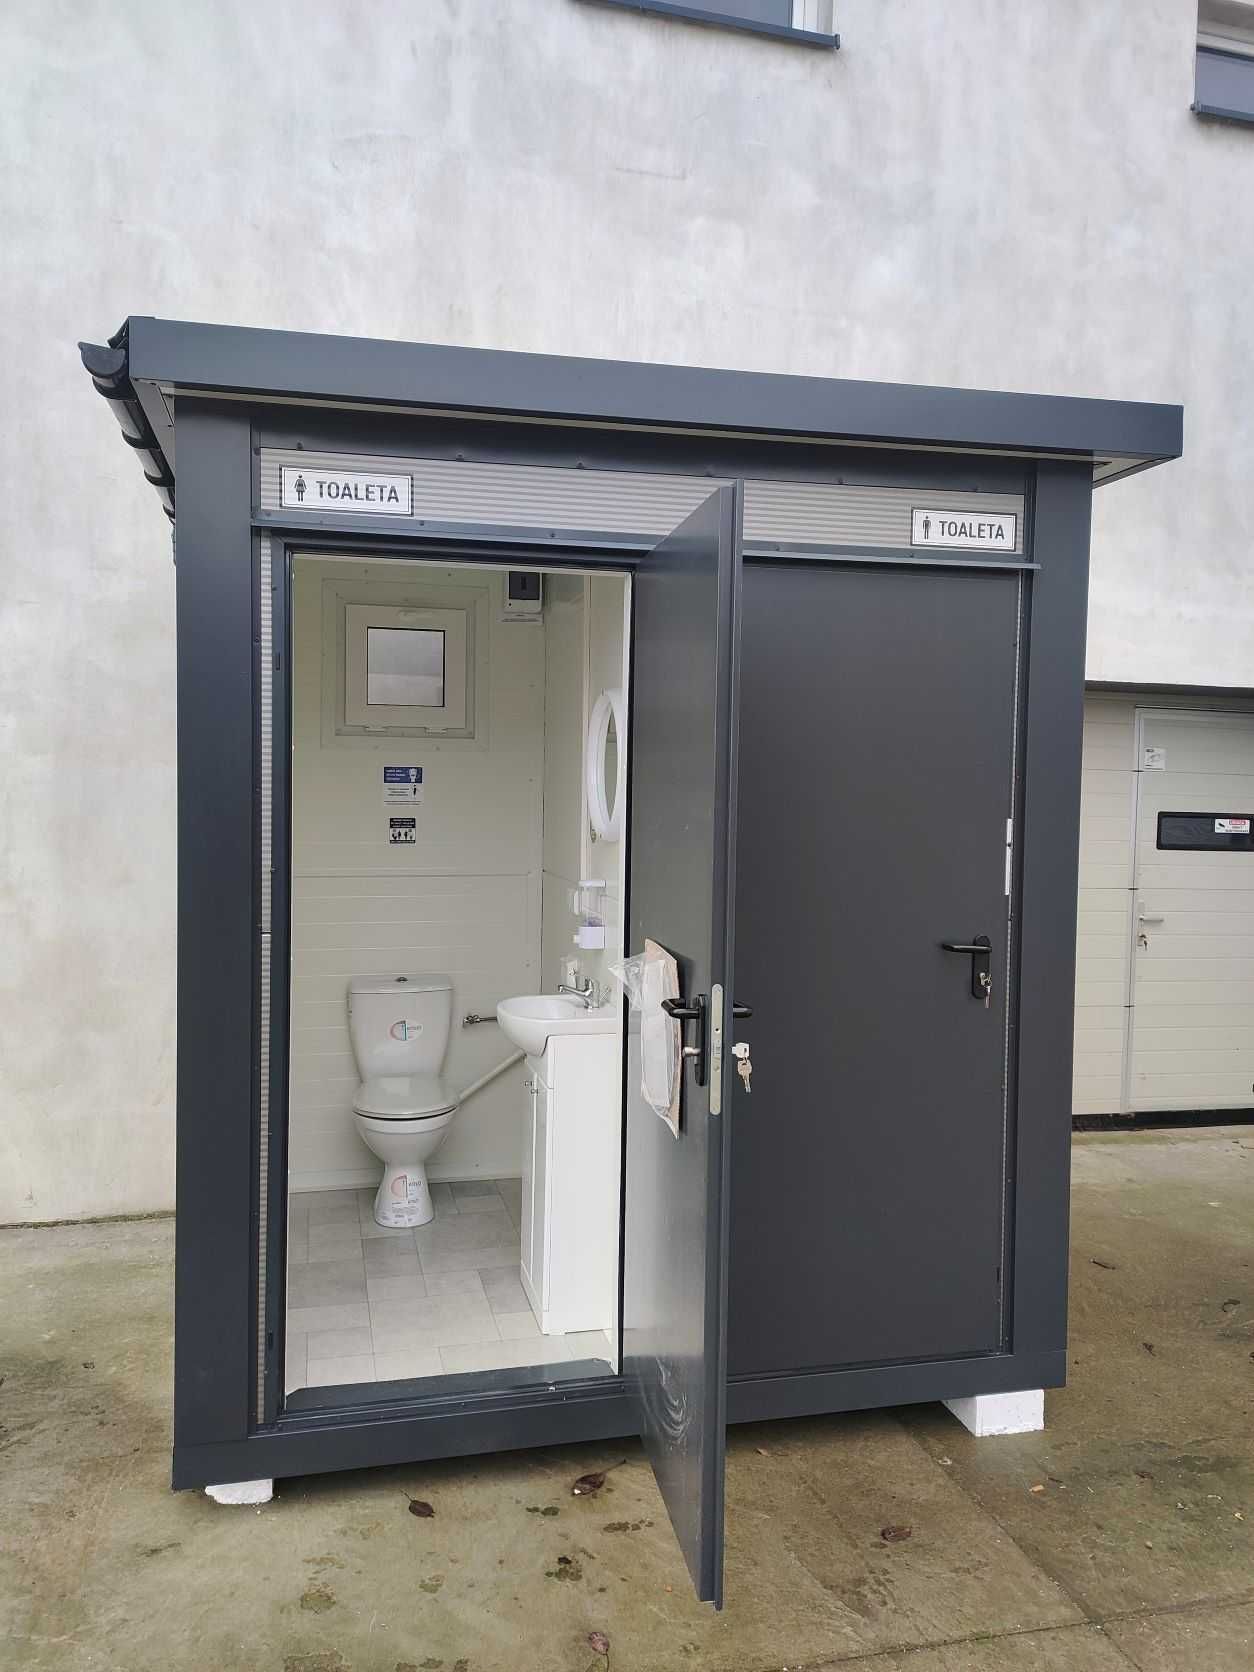 CAMPING pawilon toaleta budka kontener sanitarny wc socjalny kibel